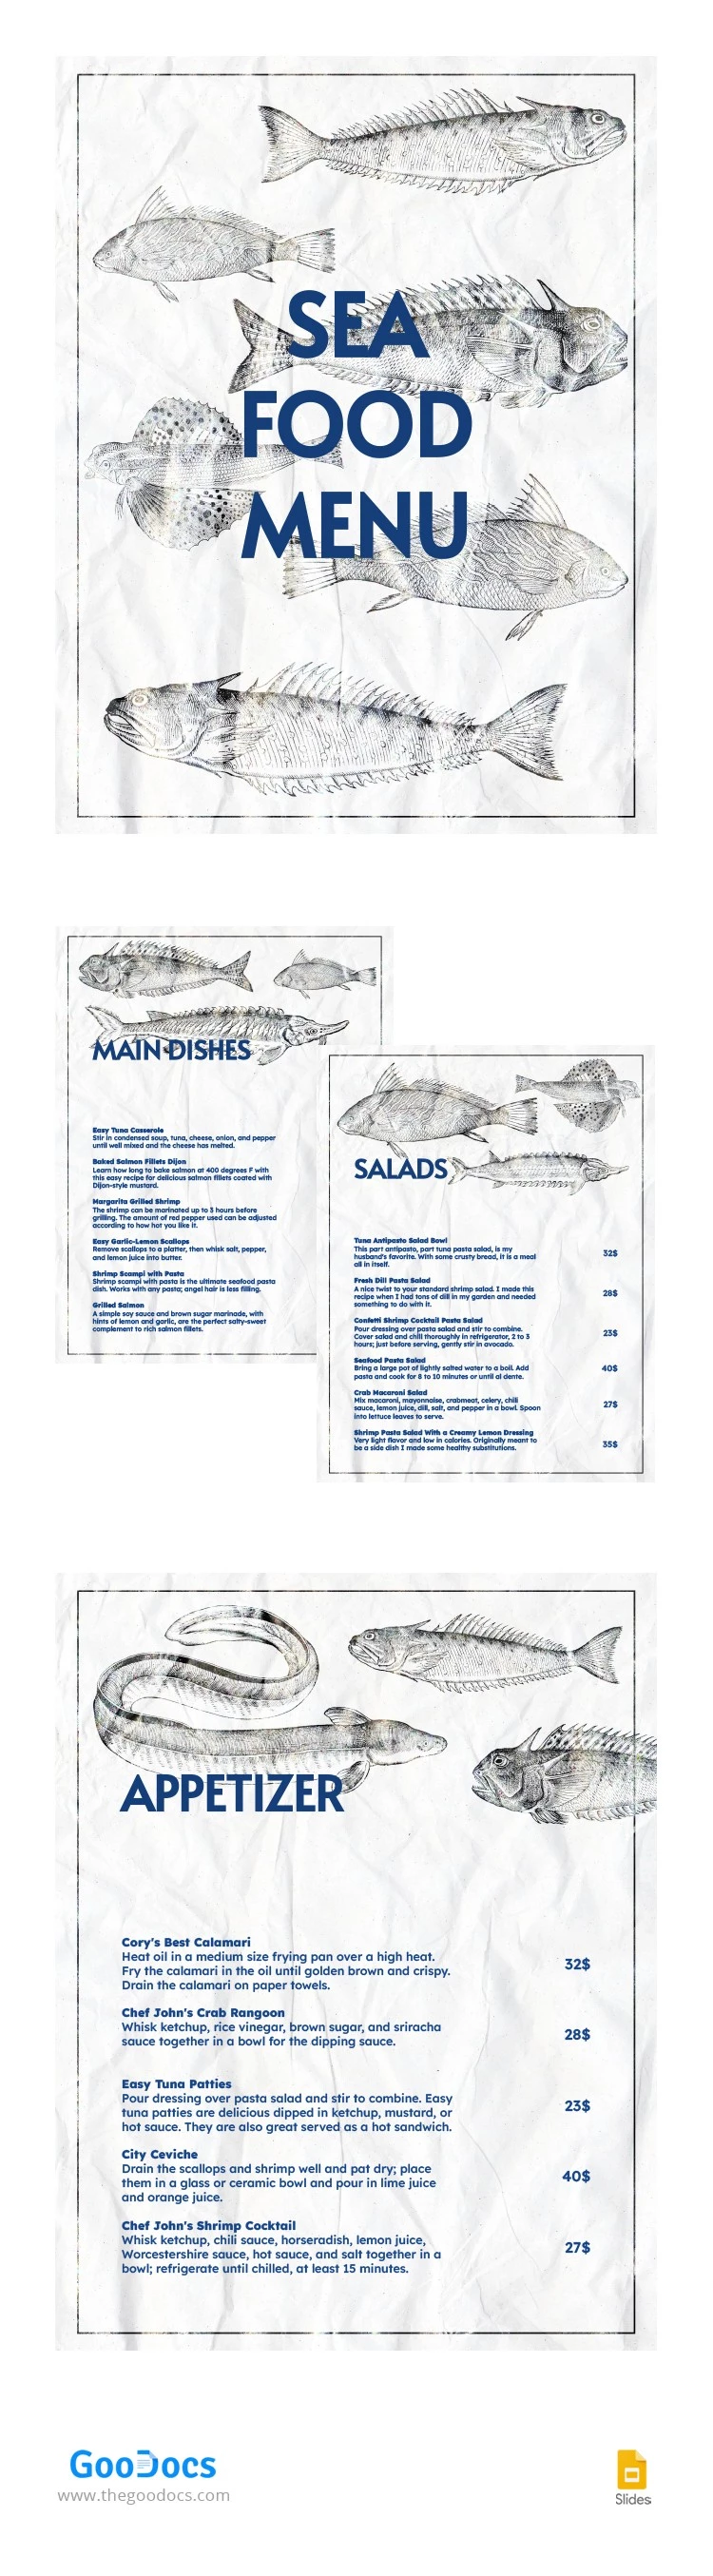 Menú del restaurante de mariscos dibujado a mano. - free Google Docs Template - 10064246